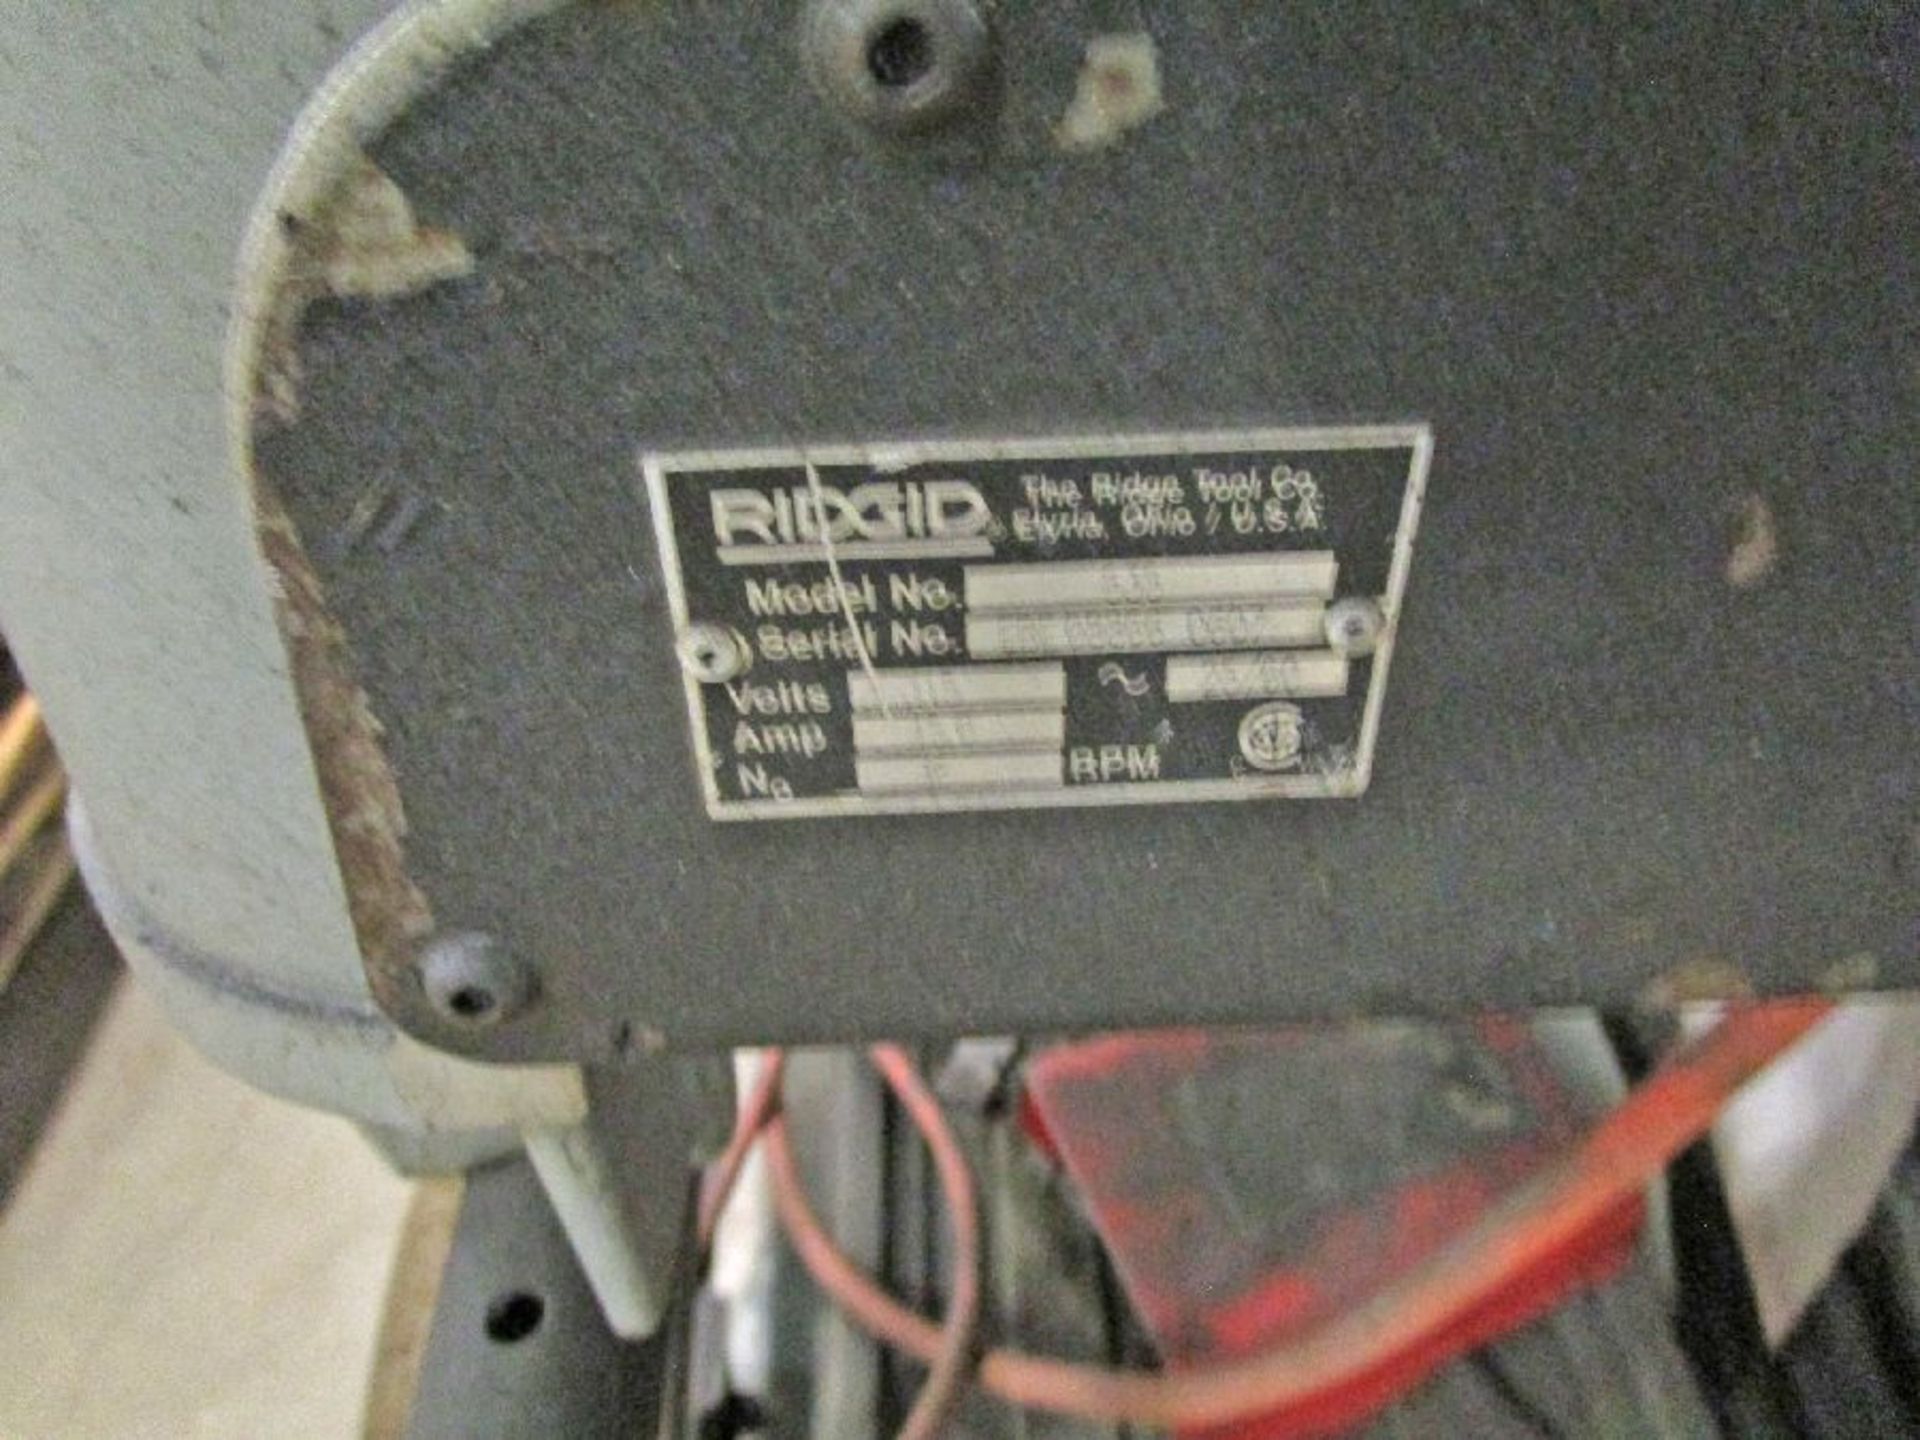 Ridgid Model 535 .13 To 2" NPT Pipe Threader - Image 5 of 5